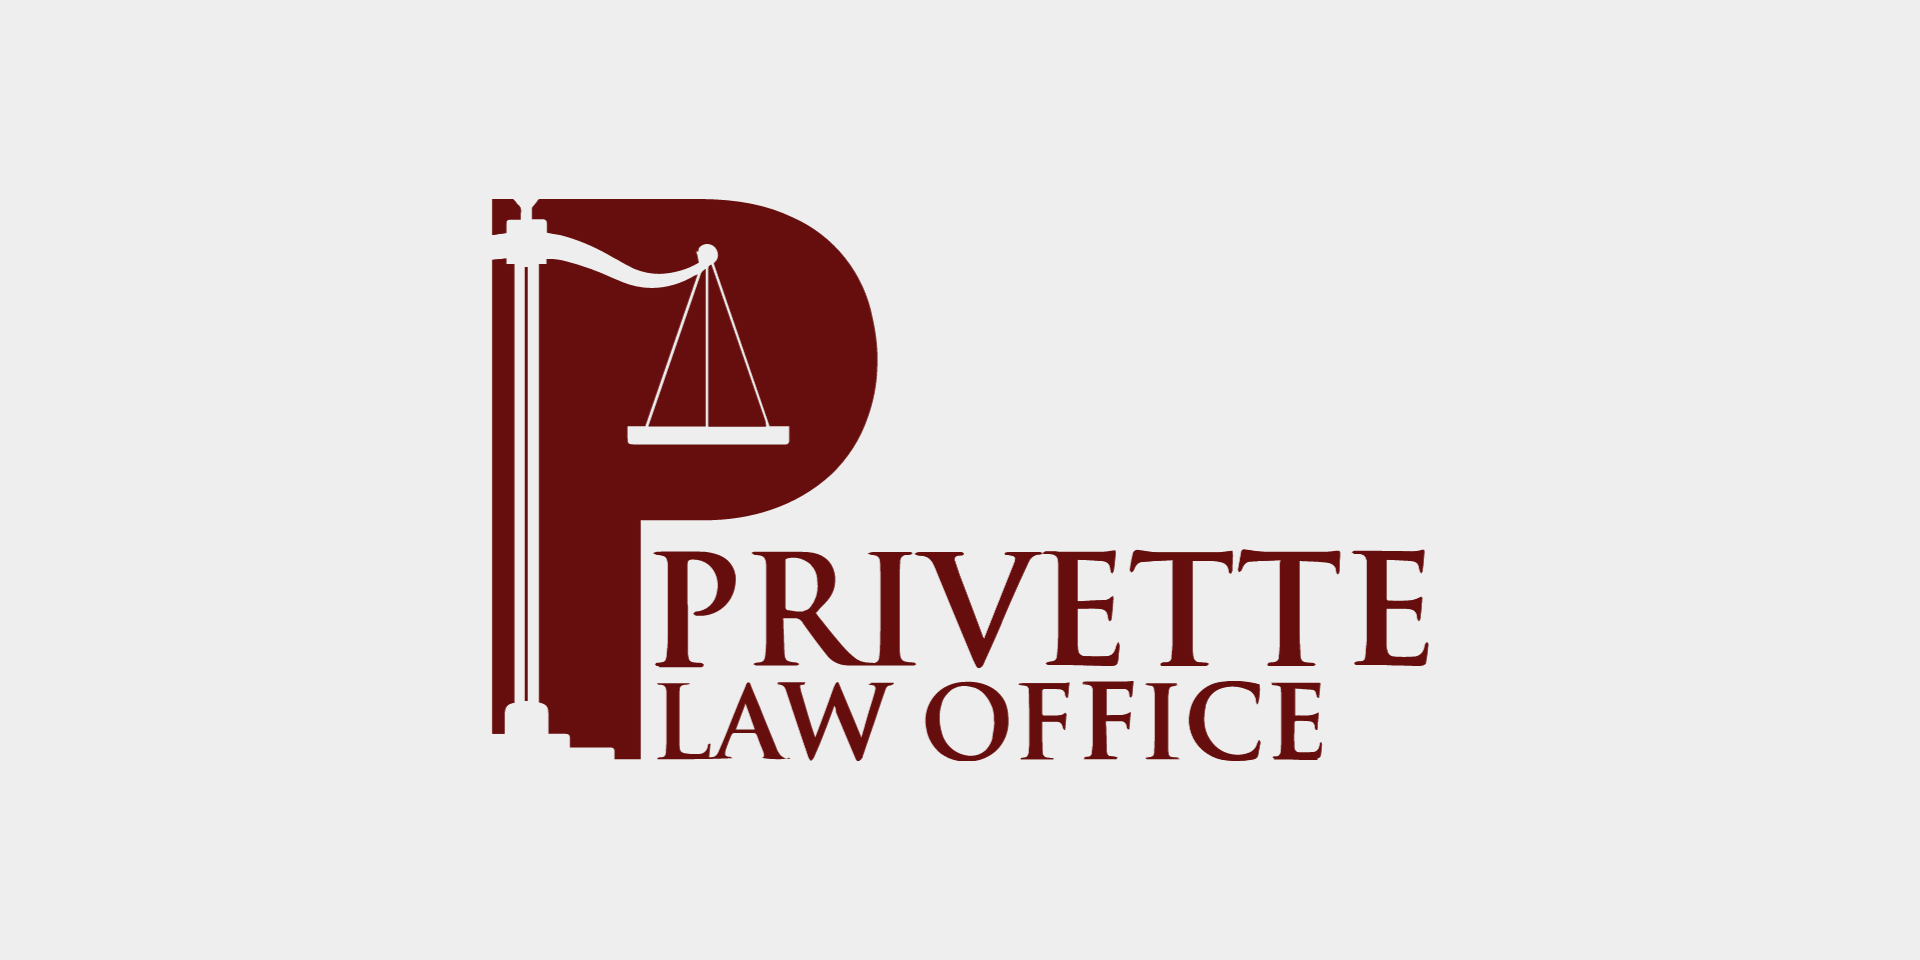 Privette Law Office